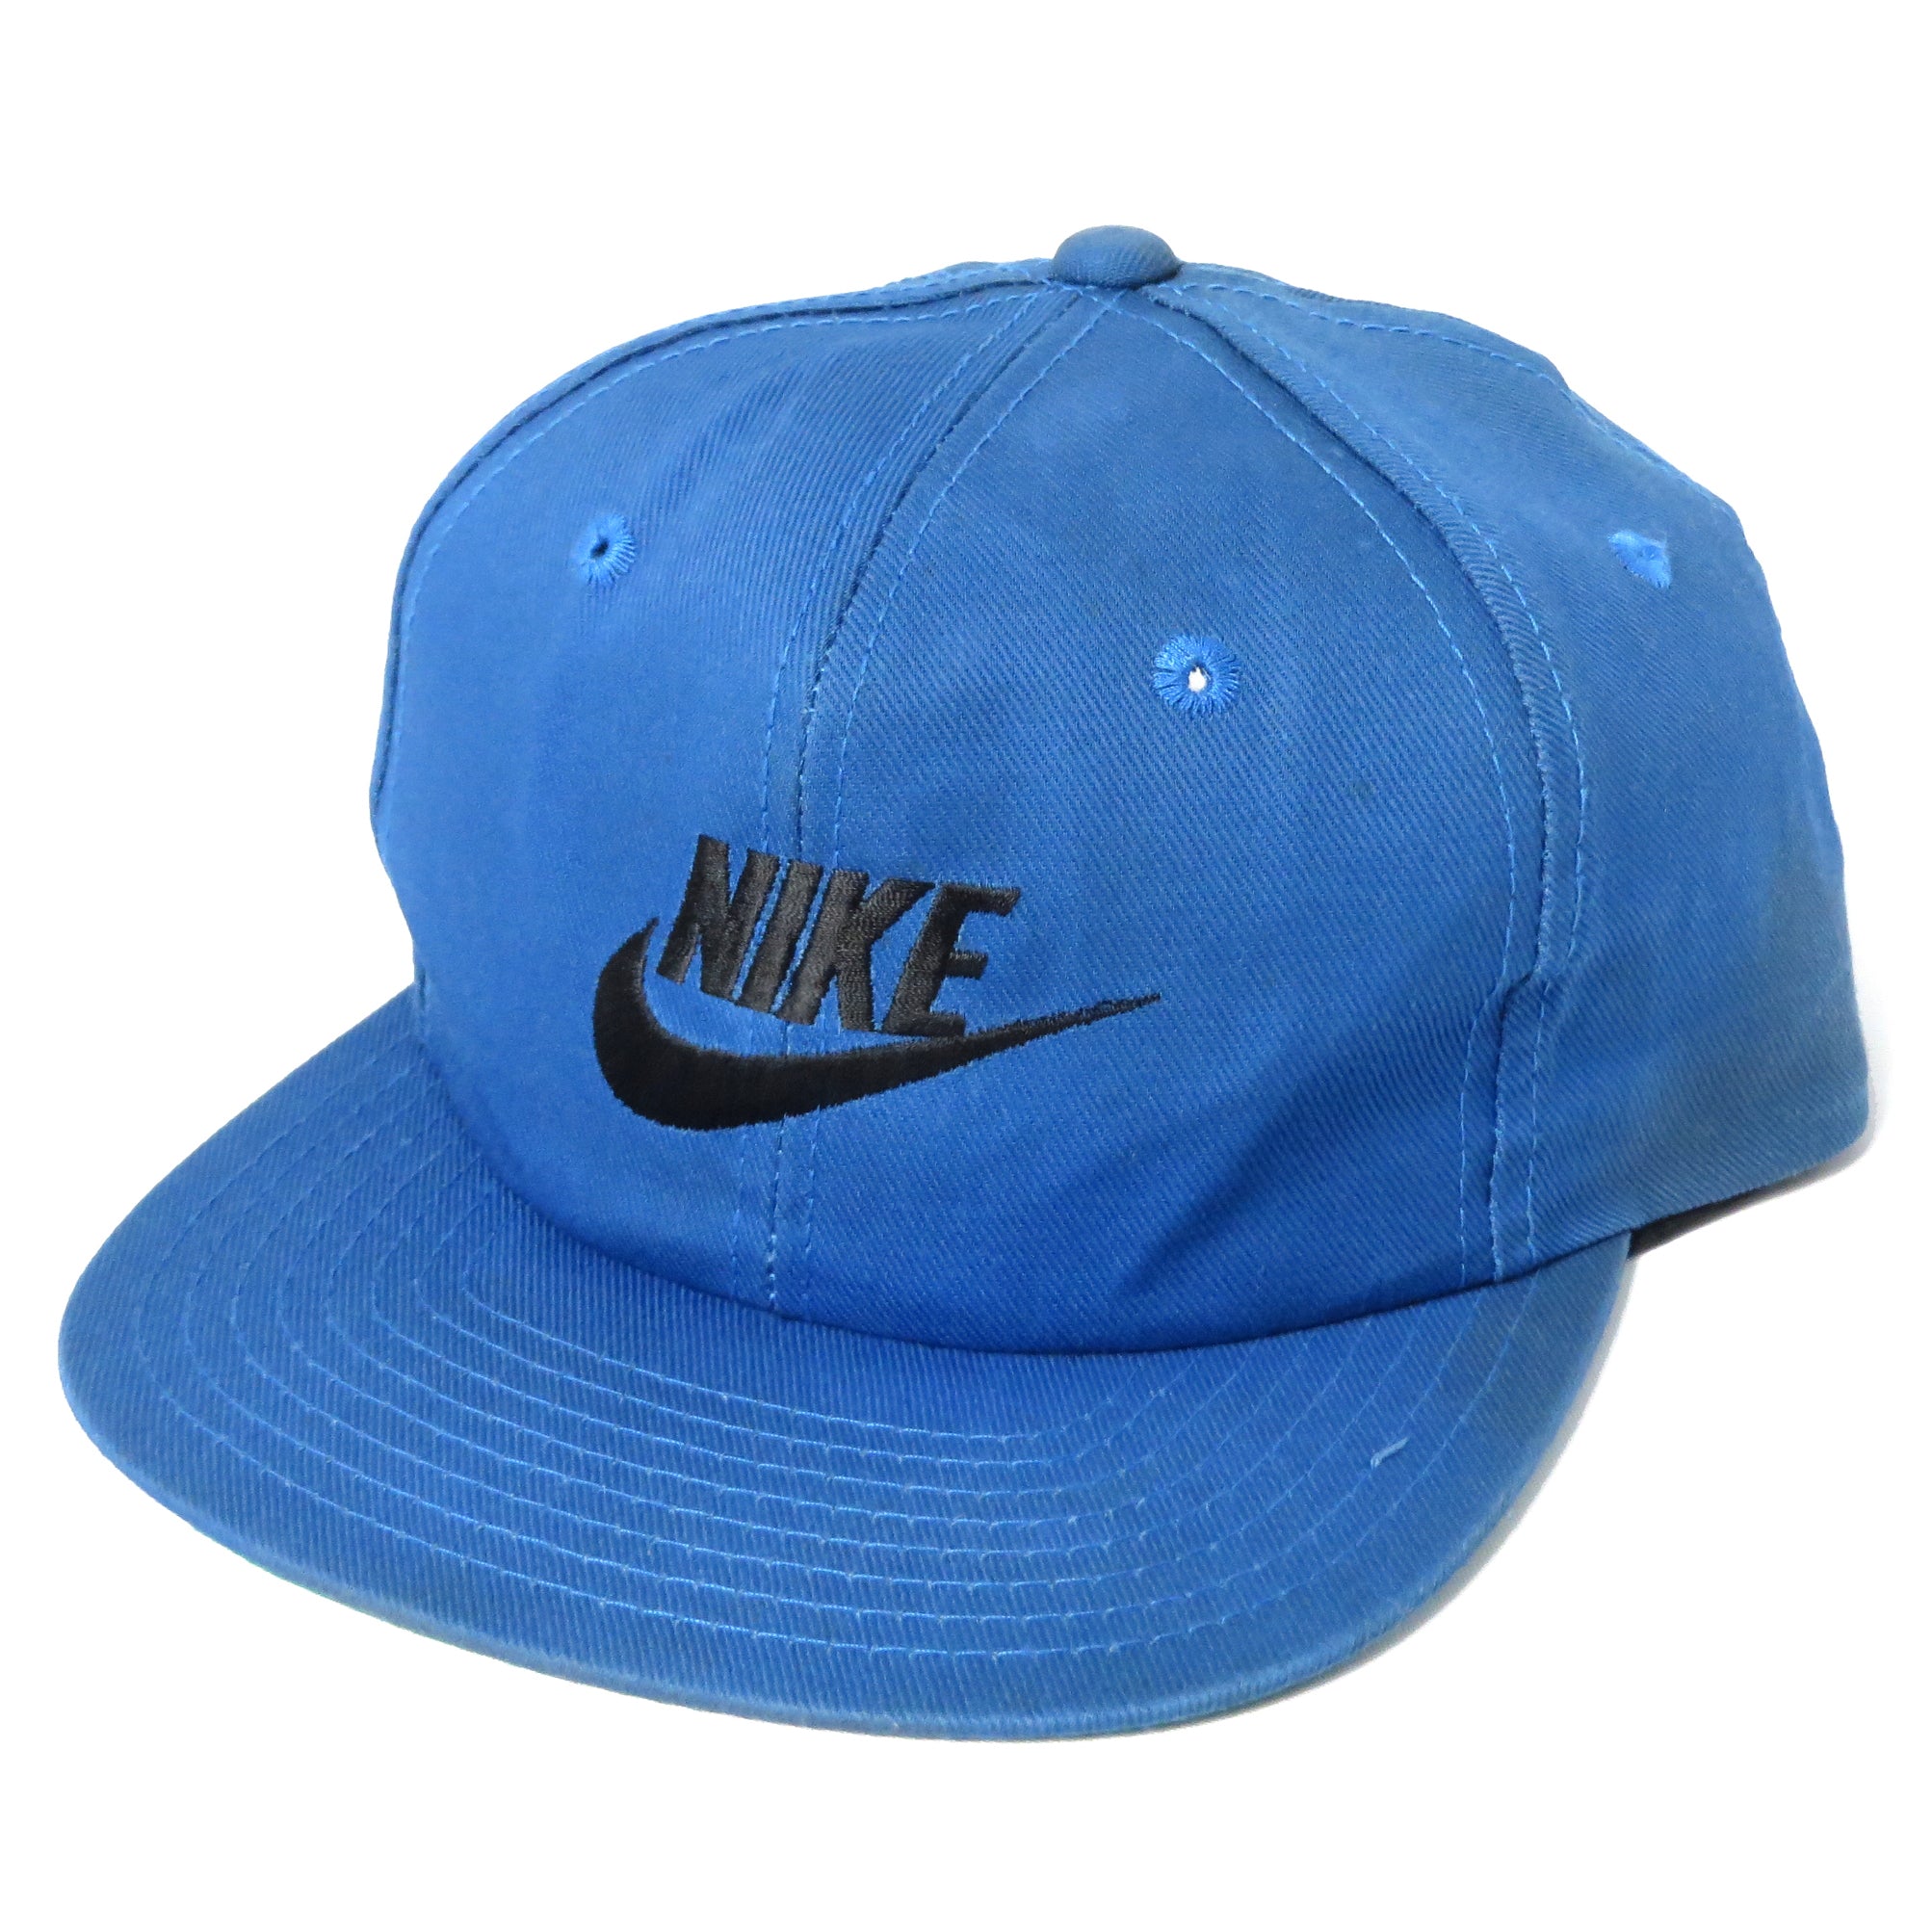 Vintage Nike Snapback Hat